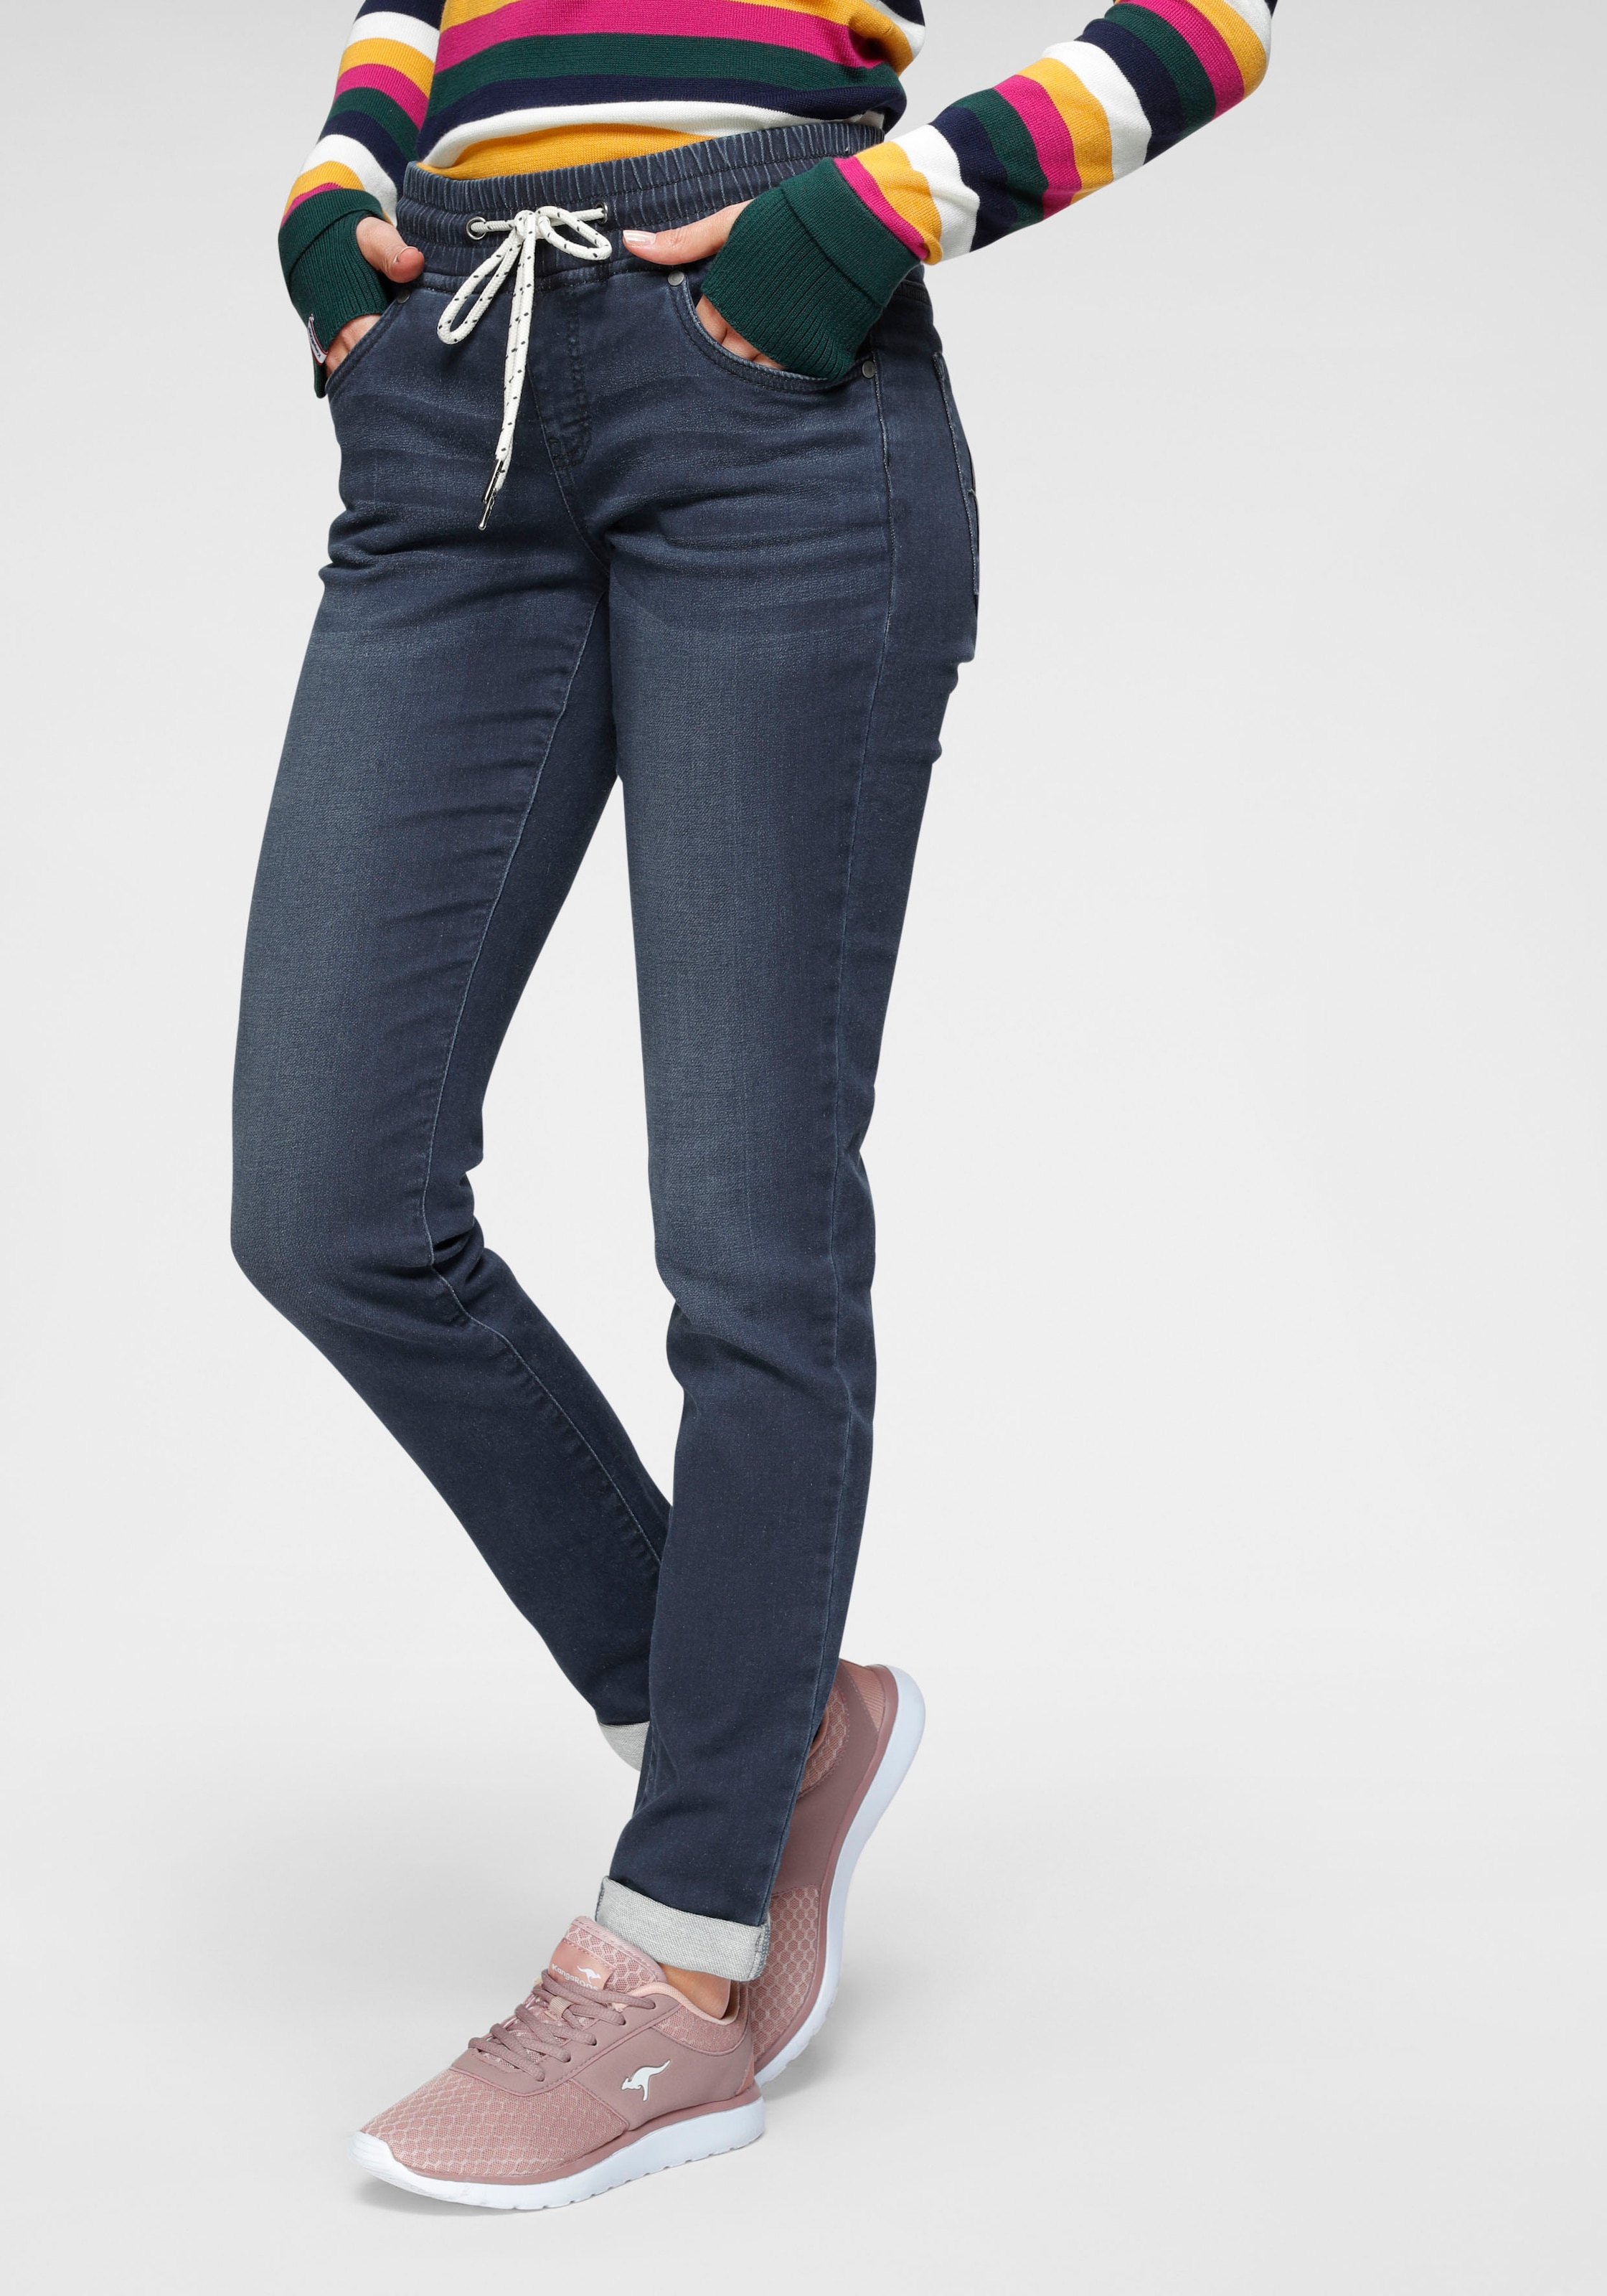 KangaROOS Bequeme Online-Shop Jeans bestellen im